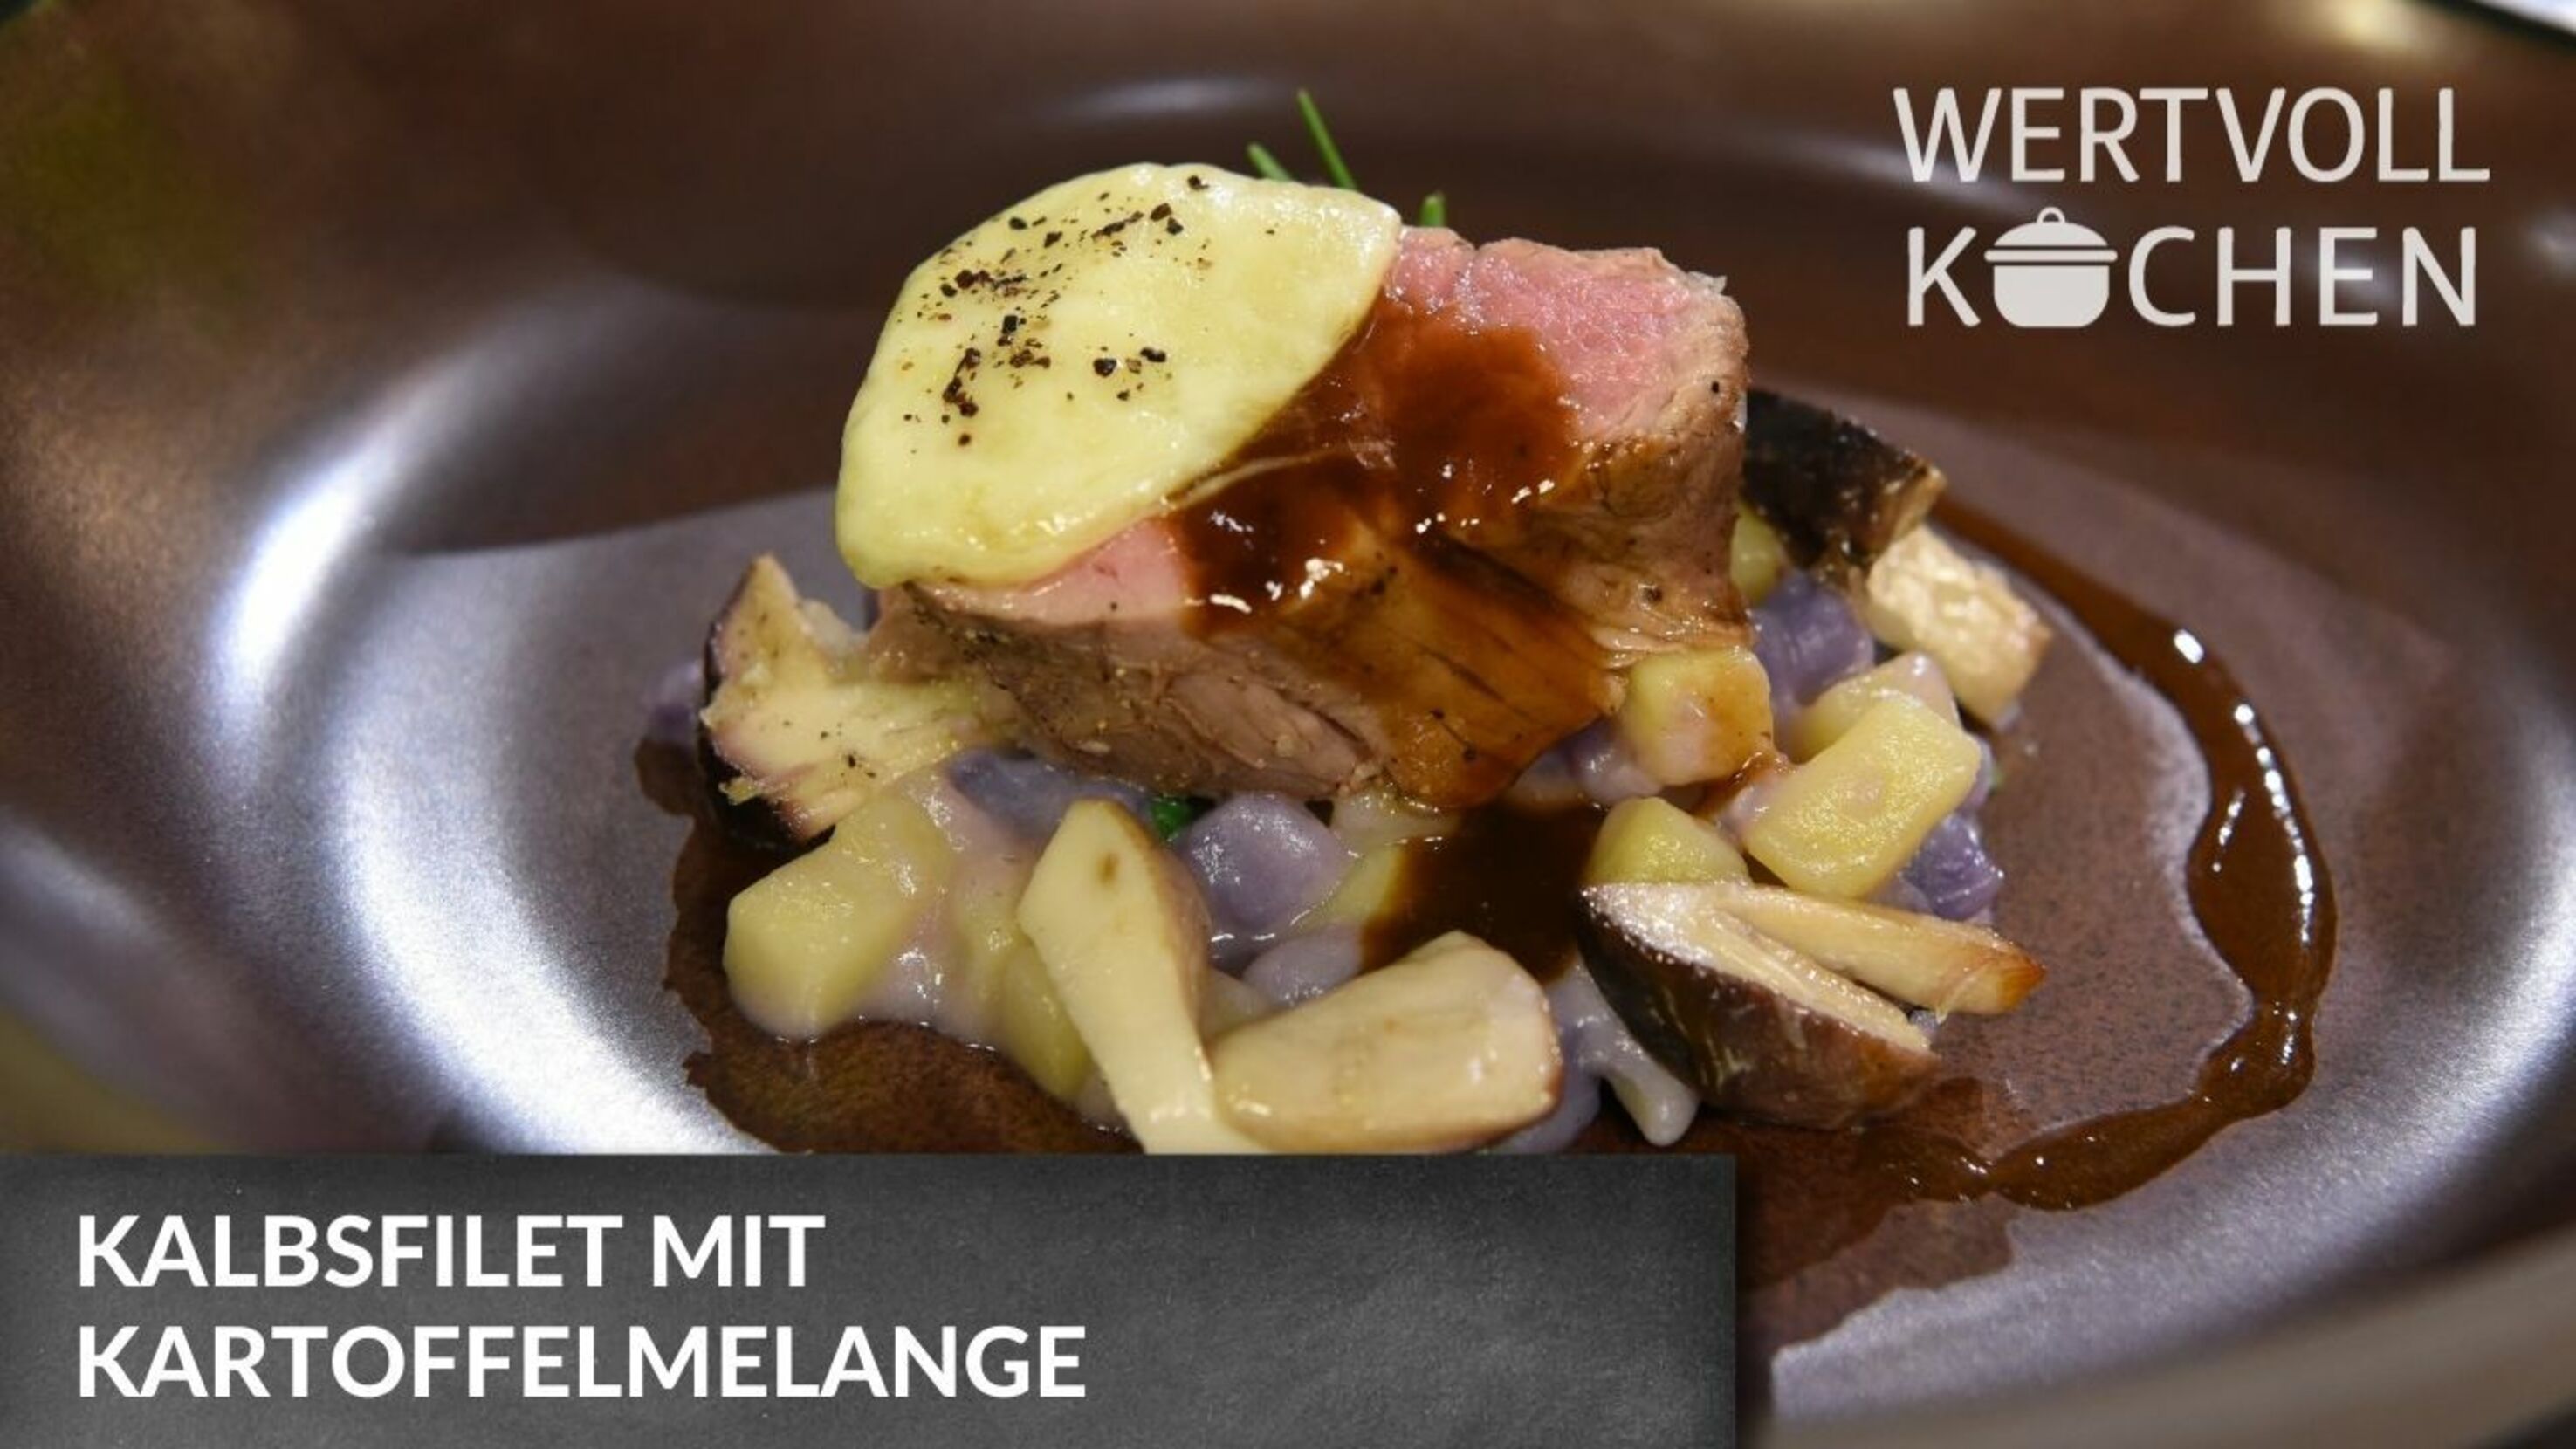 Kalbsfilet mit Kartoffelmelange | WERTVOLL KOCHEN | Regio TV